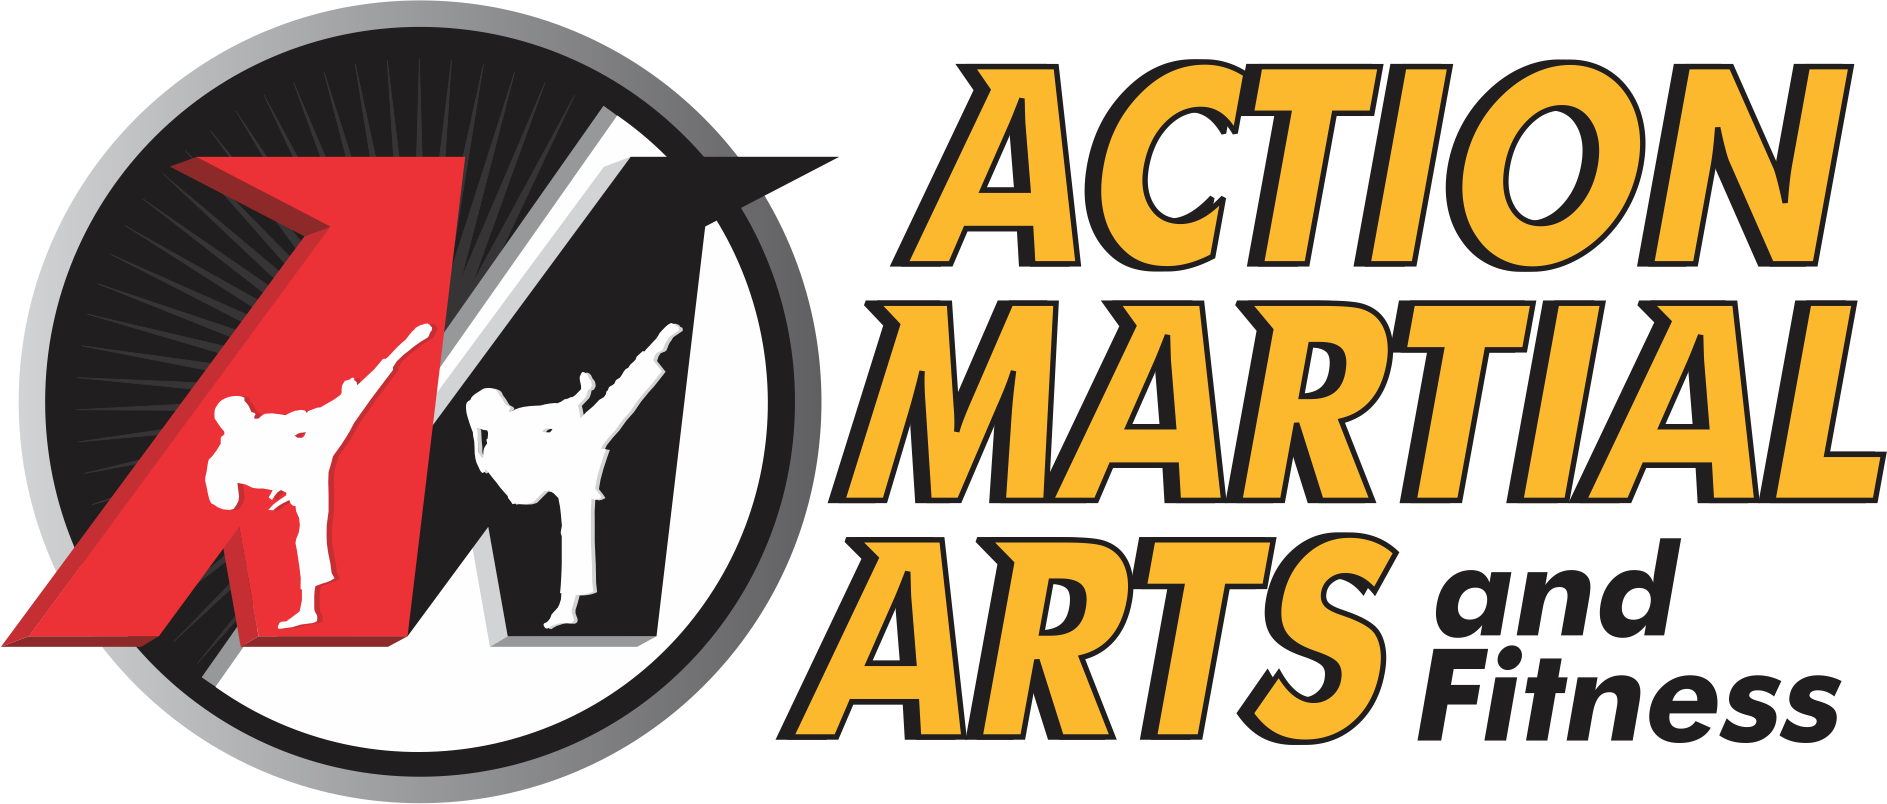 Action Martial Arts | Tae Kwon Do, Kickboxing, Sport Karate, Self Defense